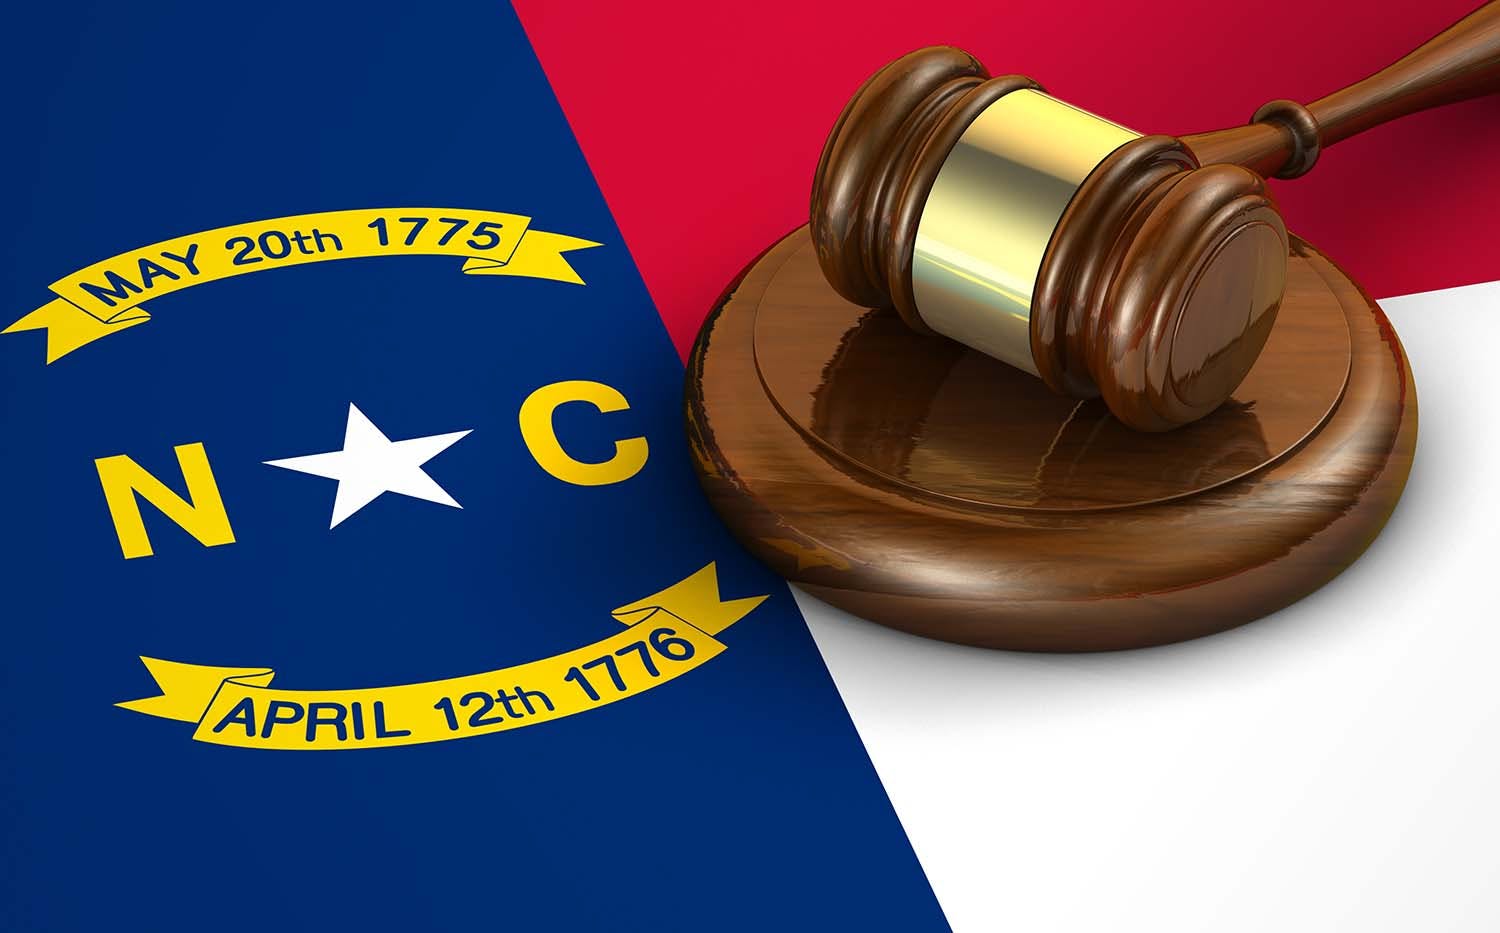 Gavel on North Carolina state flag to symbolize delta-8 legality